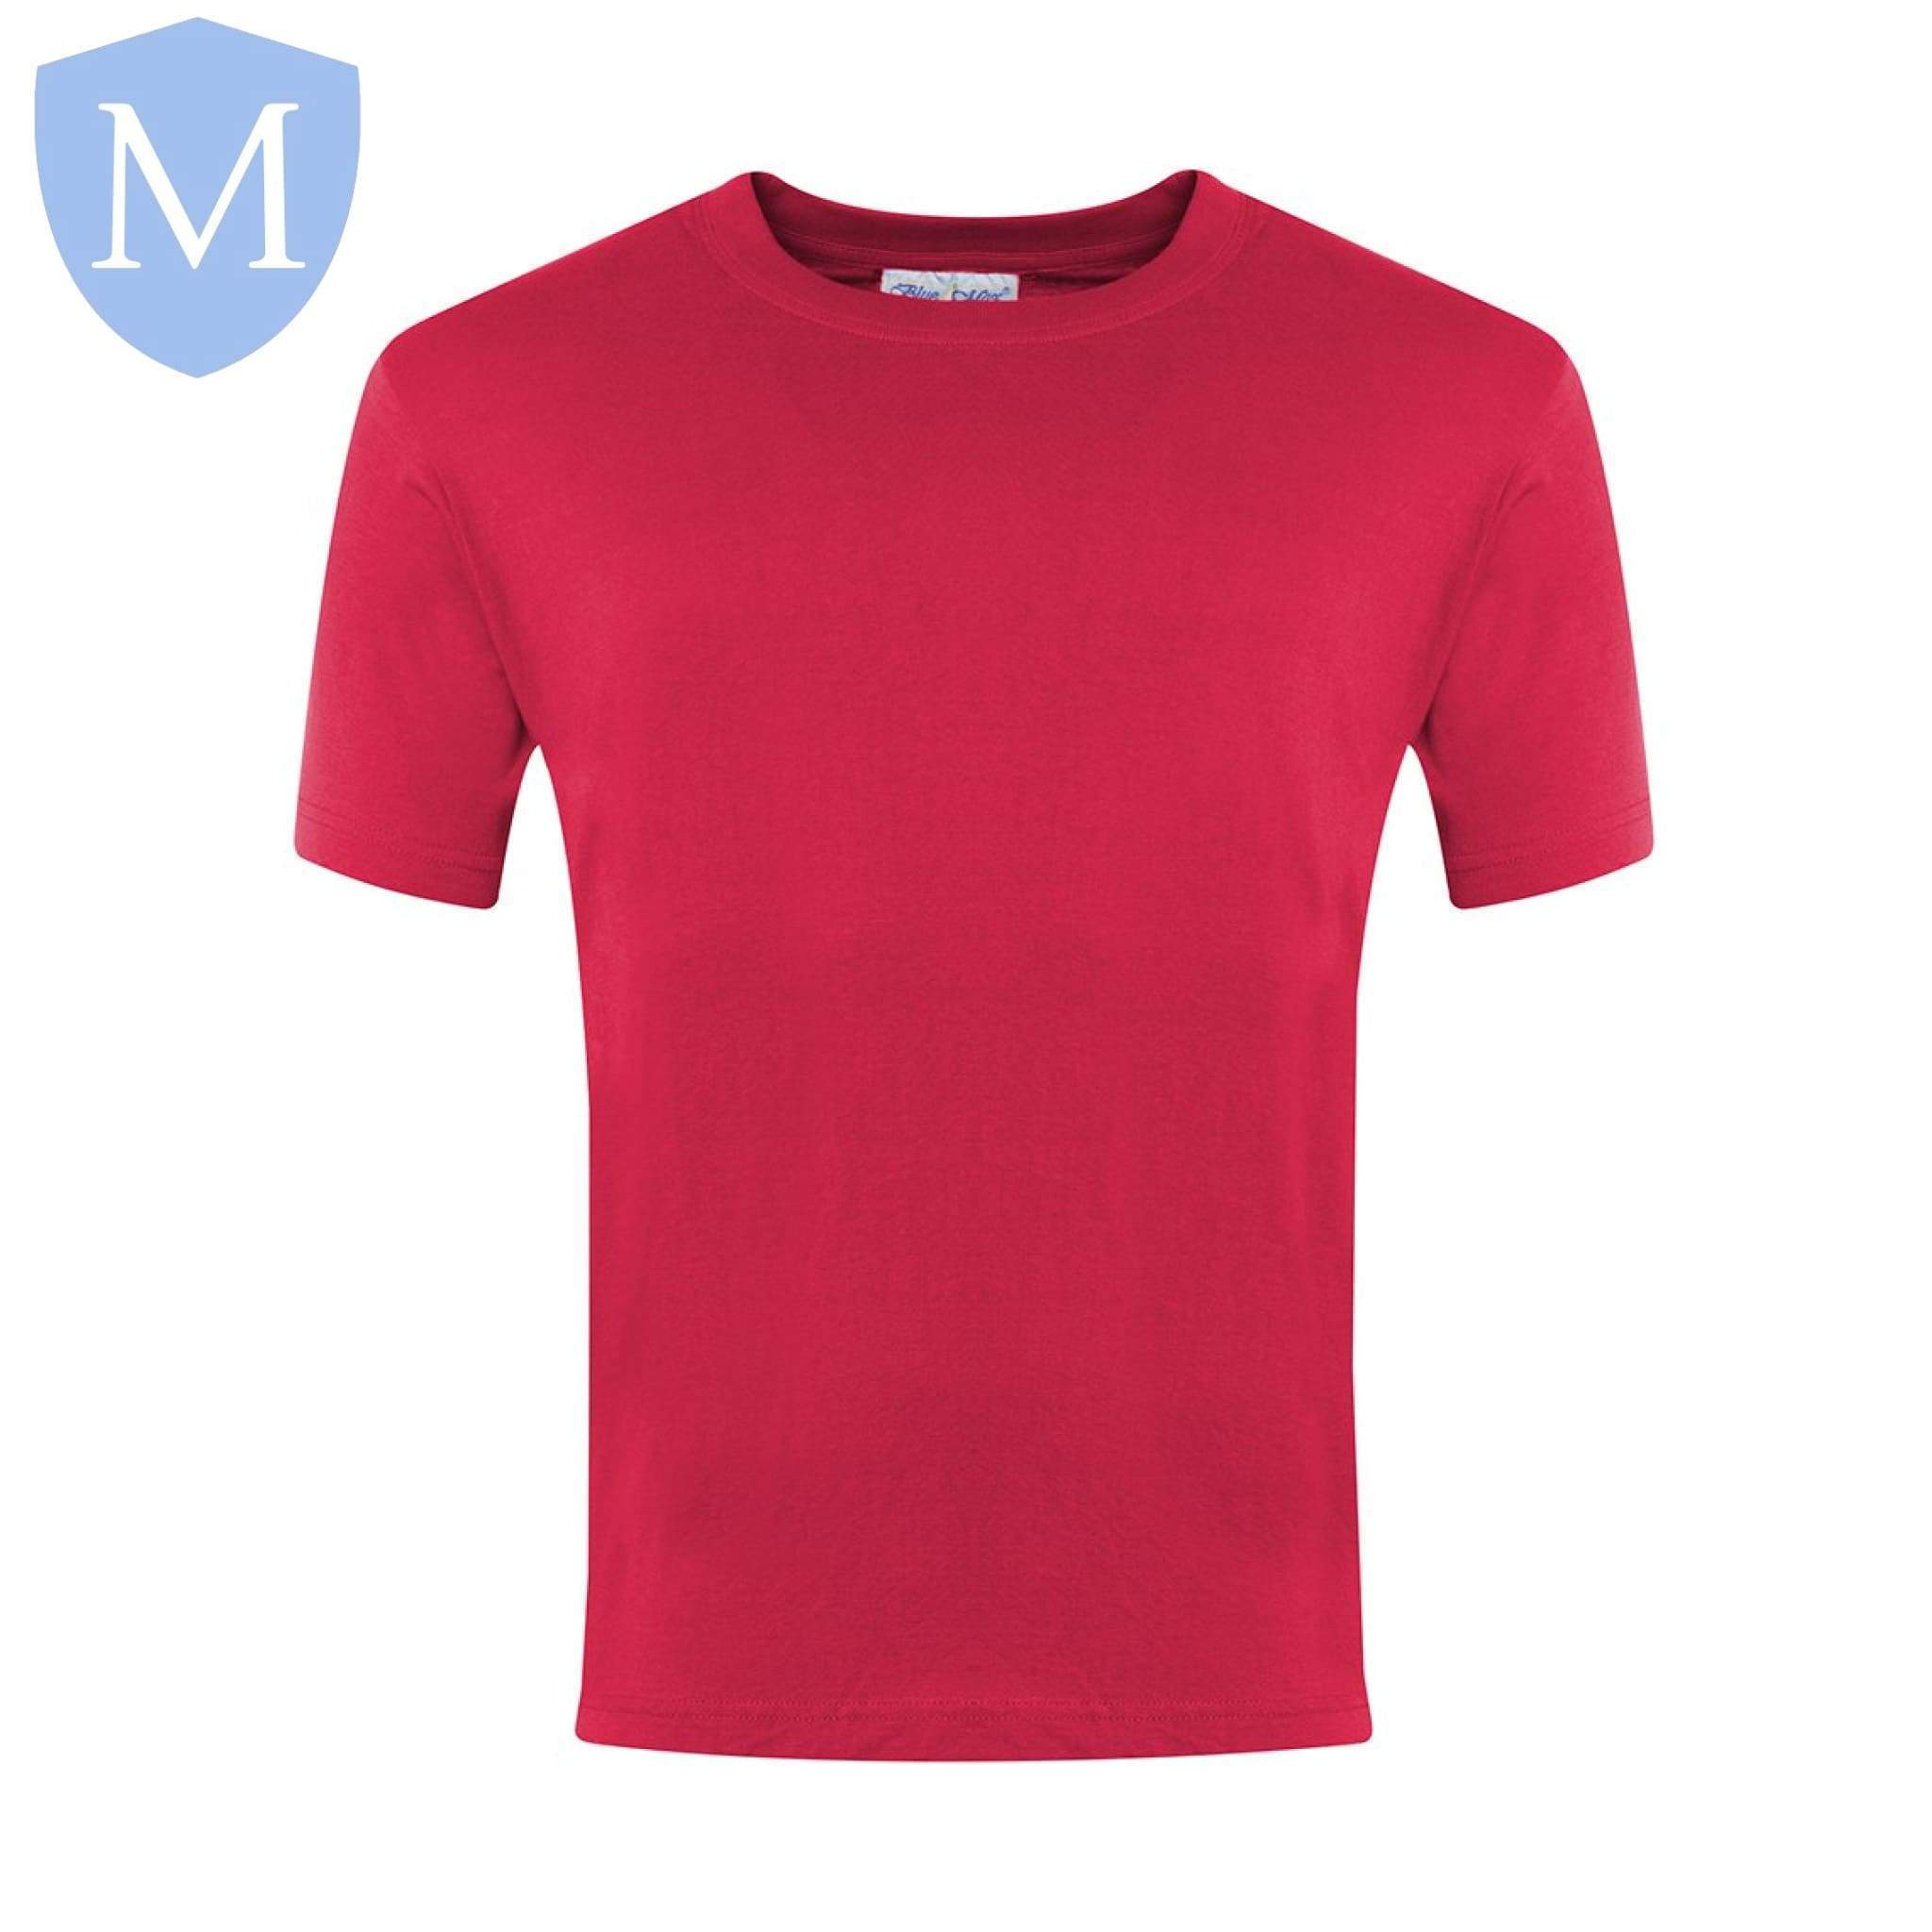 Plain Sports Round Neck T-Shirts - Red Size 11-13,Size 2-3,Size 2XL,Size 3-4,Size 3XL,Size 5-6,Size 7-8,Size 9-10,Size Large,Size Medium,Size Small,Size XL